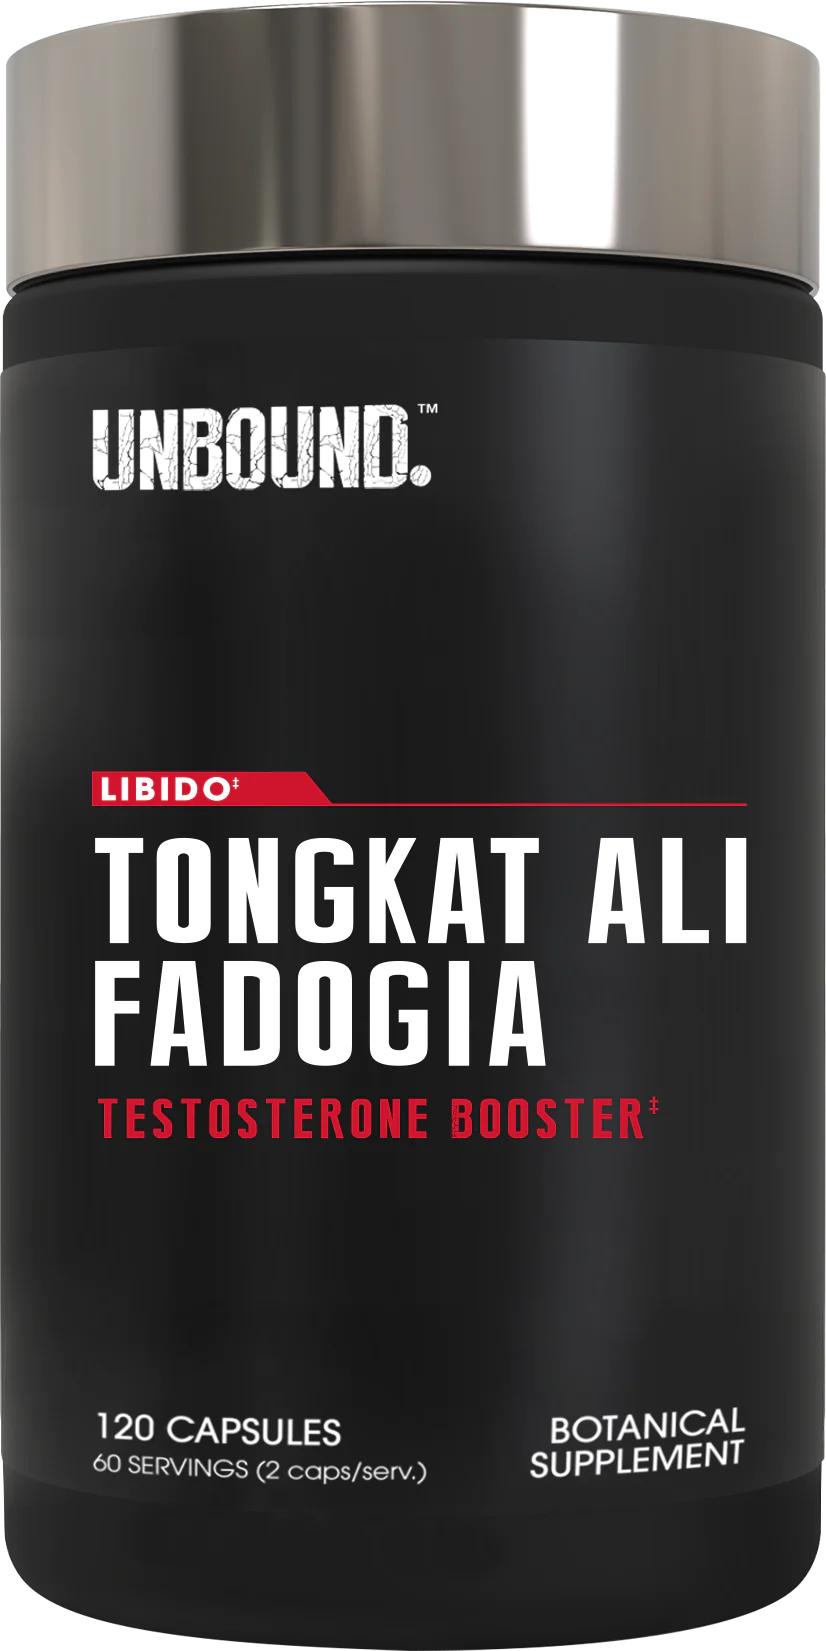 Tongkat Ali & Fadogia Testosterone Booster